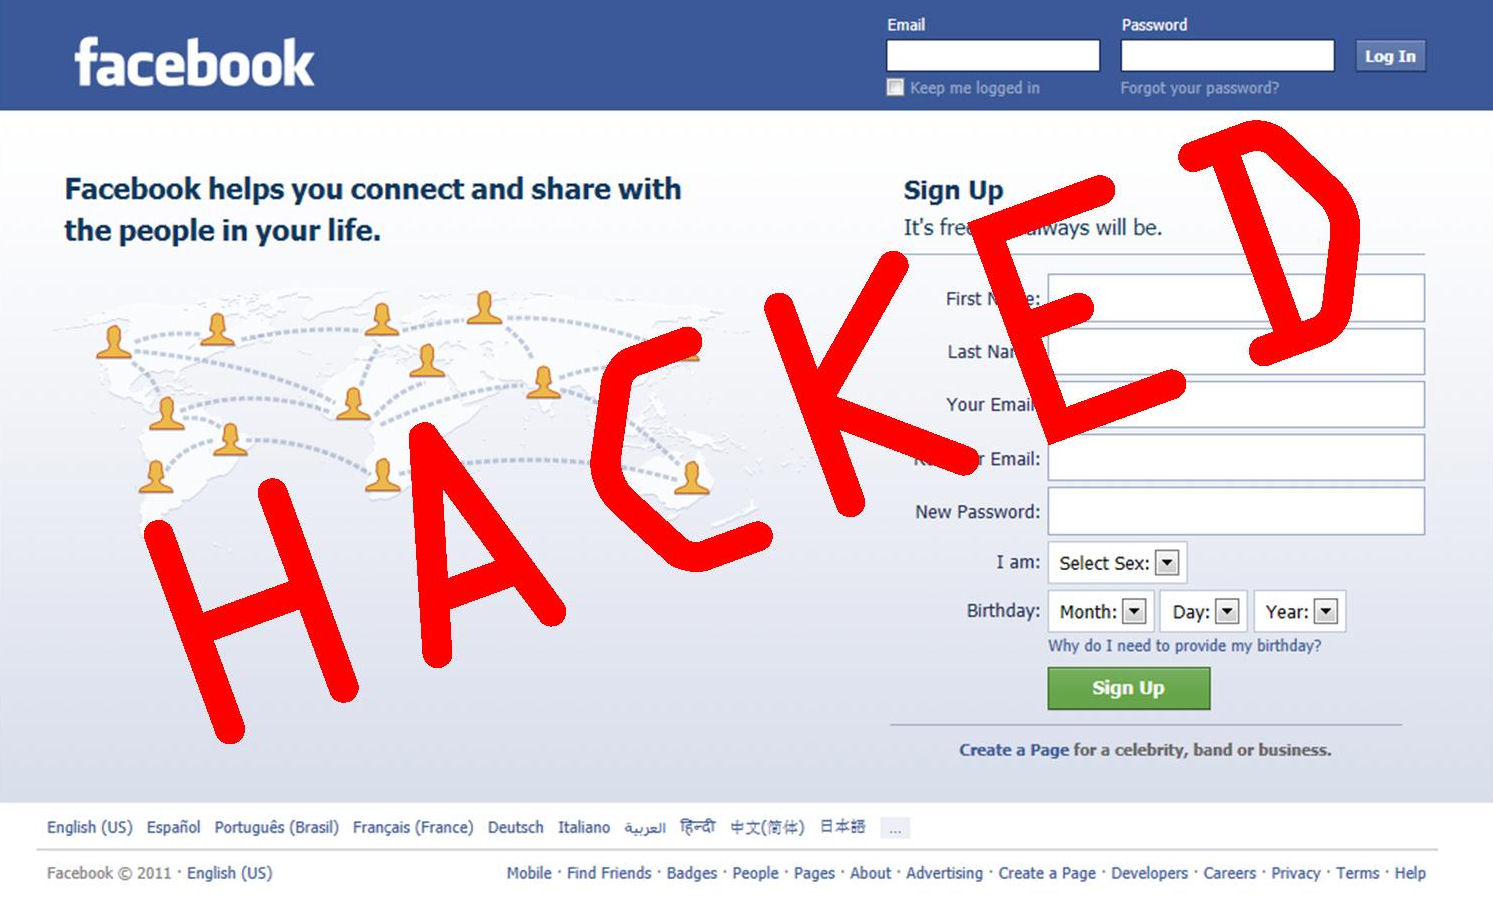 Facetool V1.2 Facebook Accounts Hacking Tool